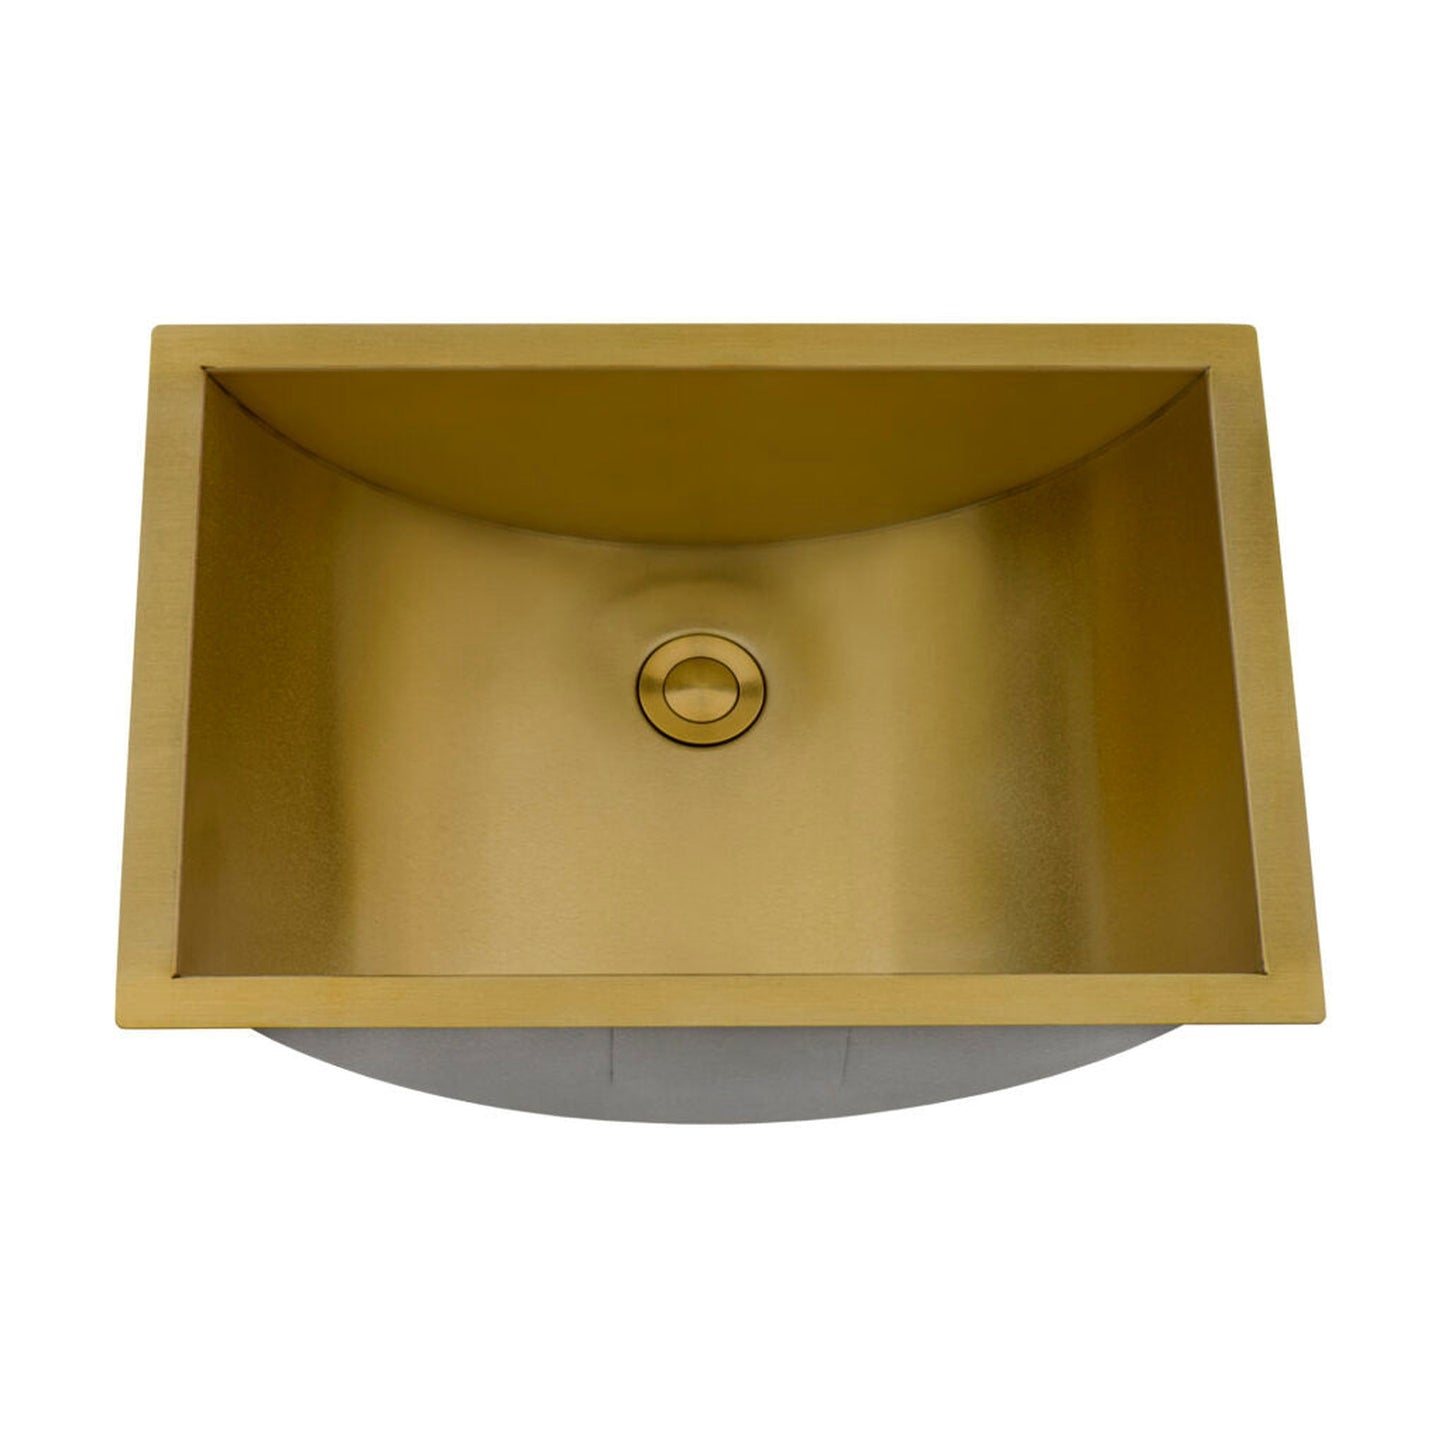 Ruvati Ariaso 18” x 12” Brushed Gold Polished Brass Undermount Bathroom Sink